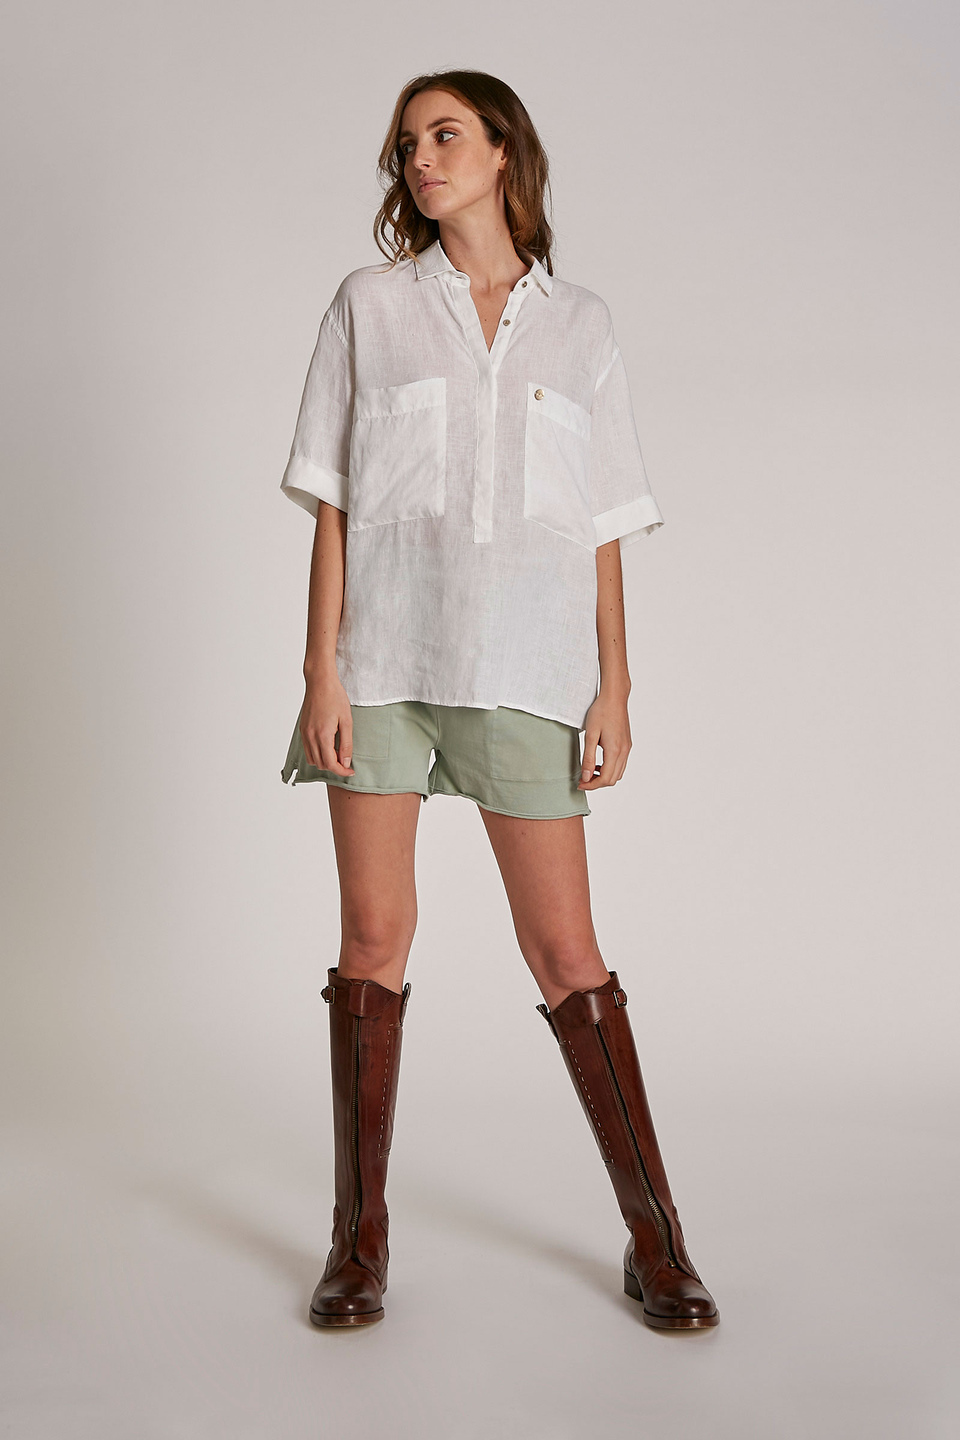 Camicia da donna in lino 100% tinta unita regular fit | La Martina - Official Online Shop